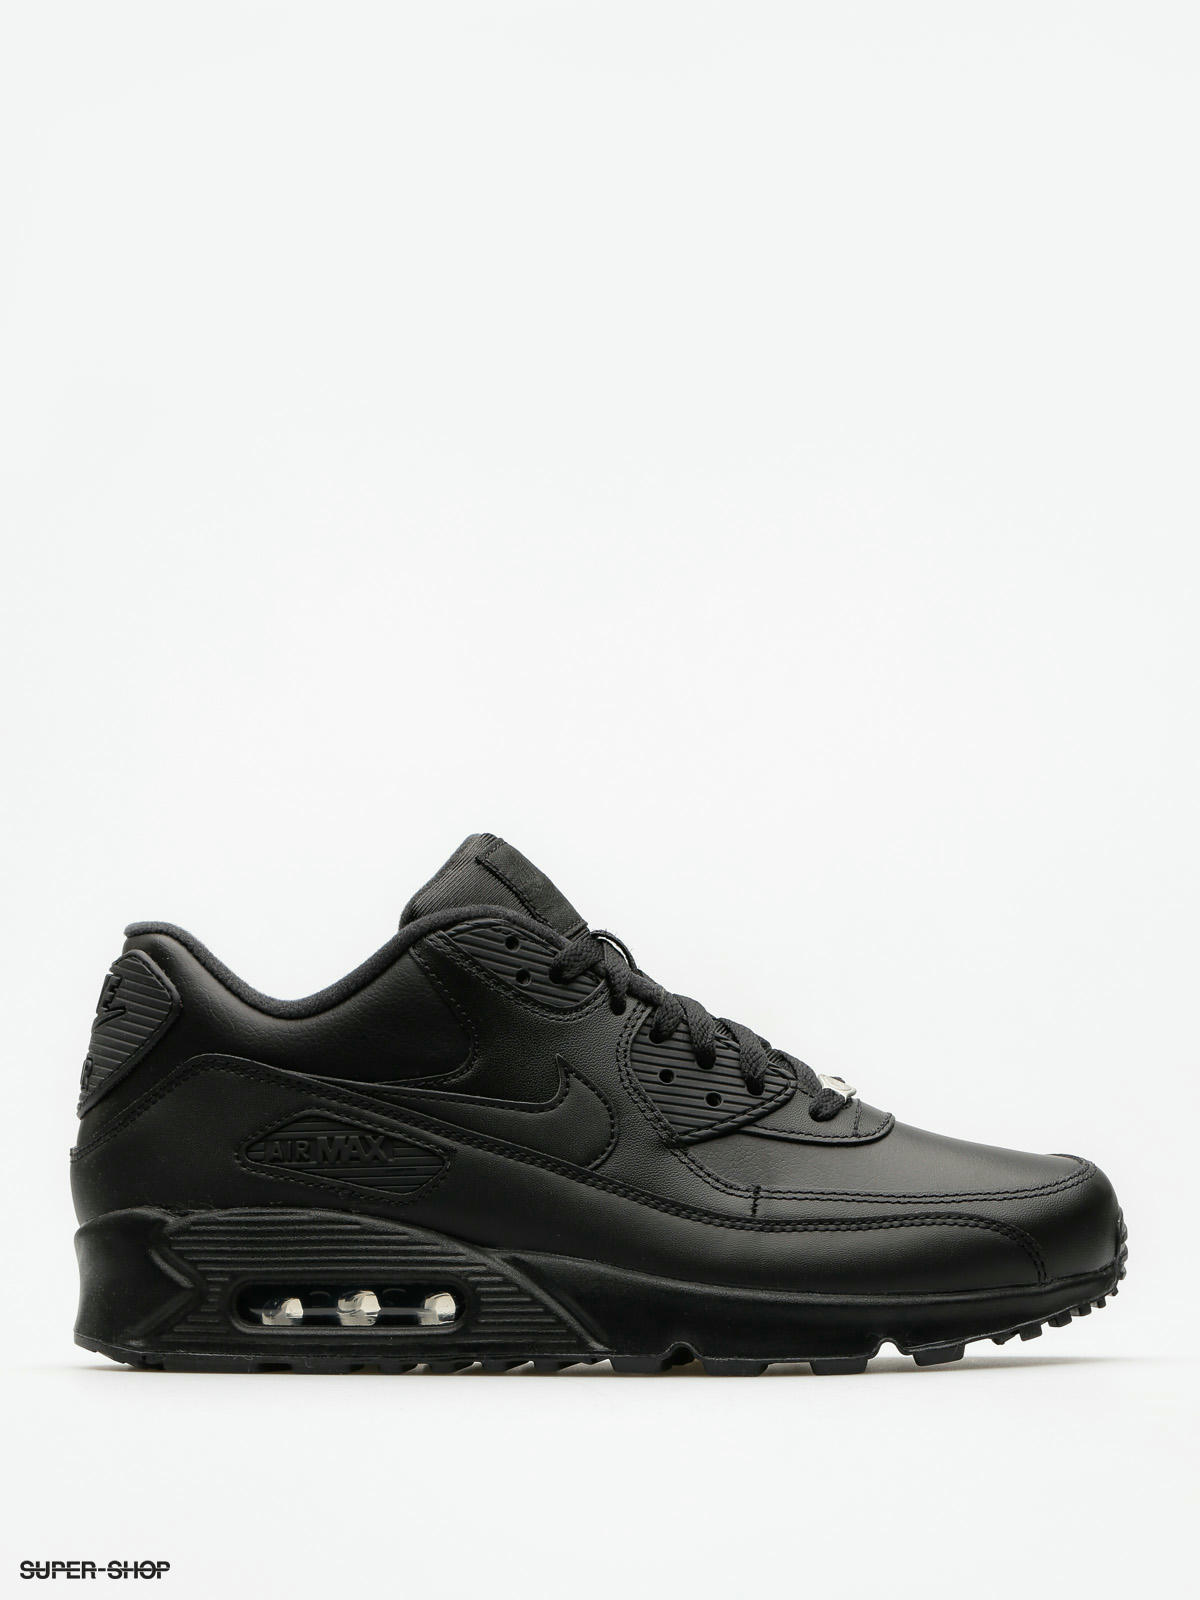 Nike Air Max 90 Schuhe (Leather black 